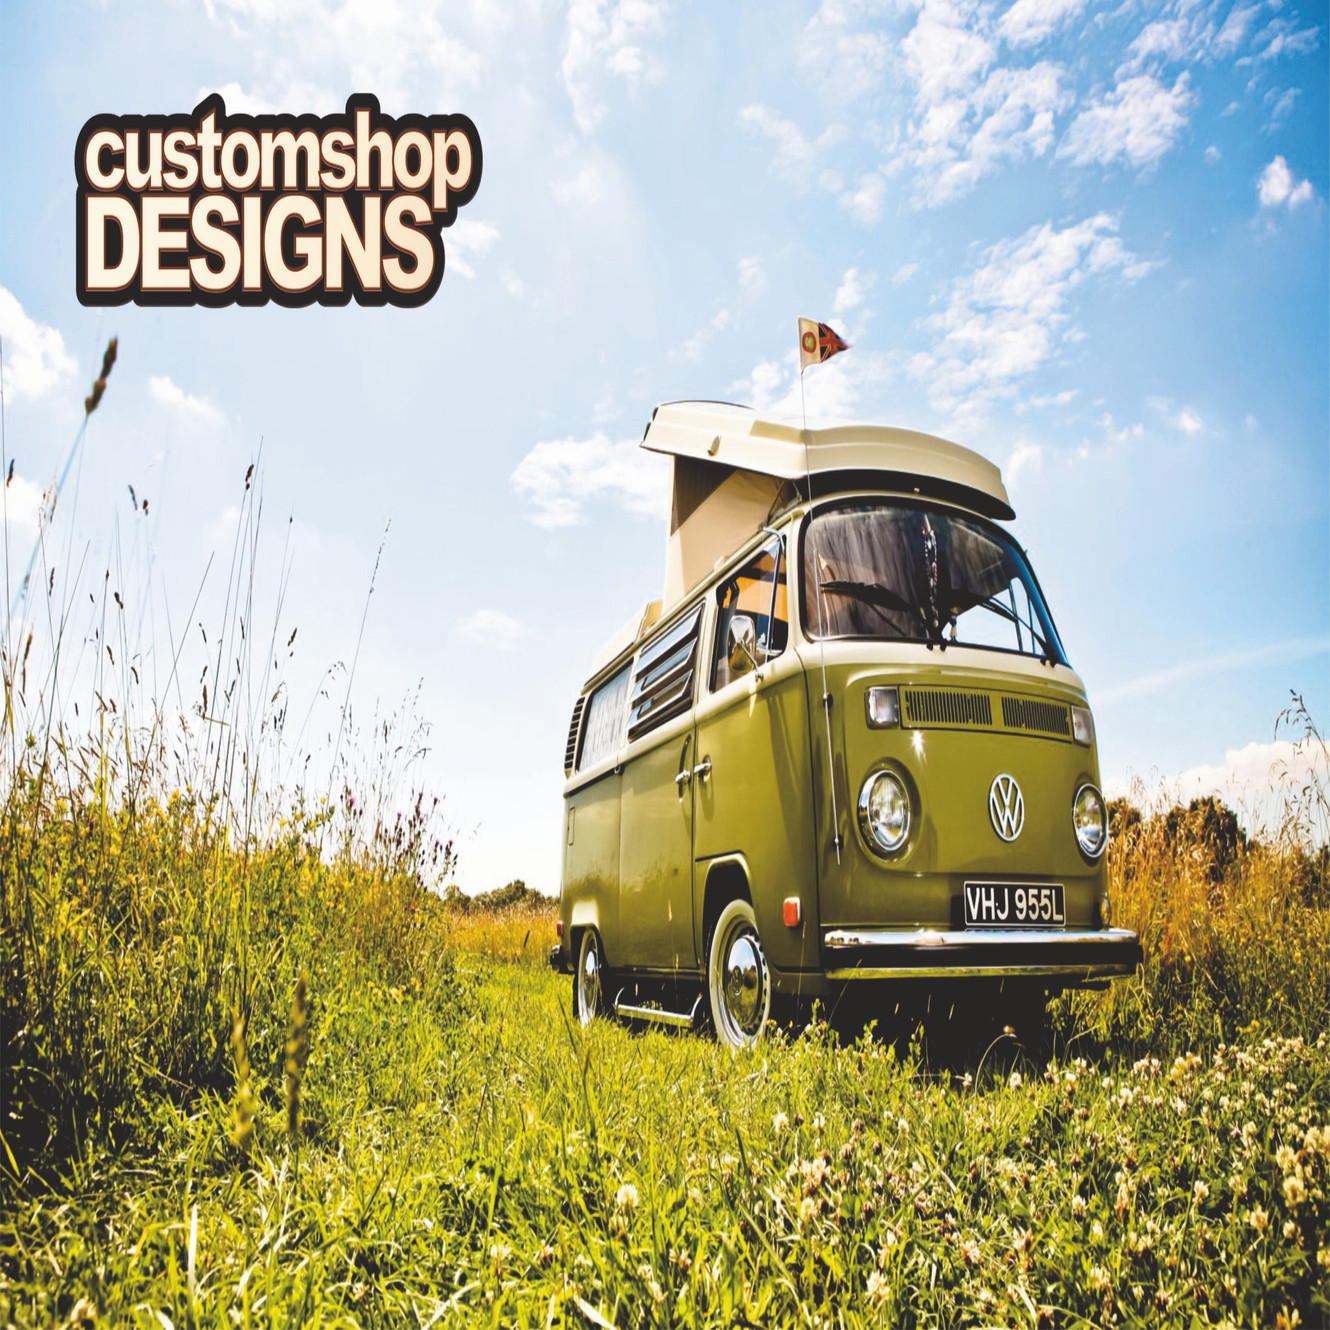 www.customshopdesigns.com